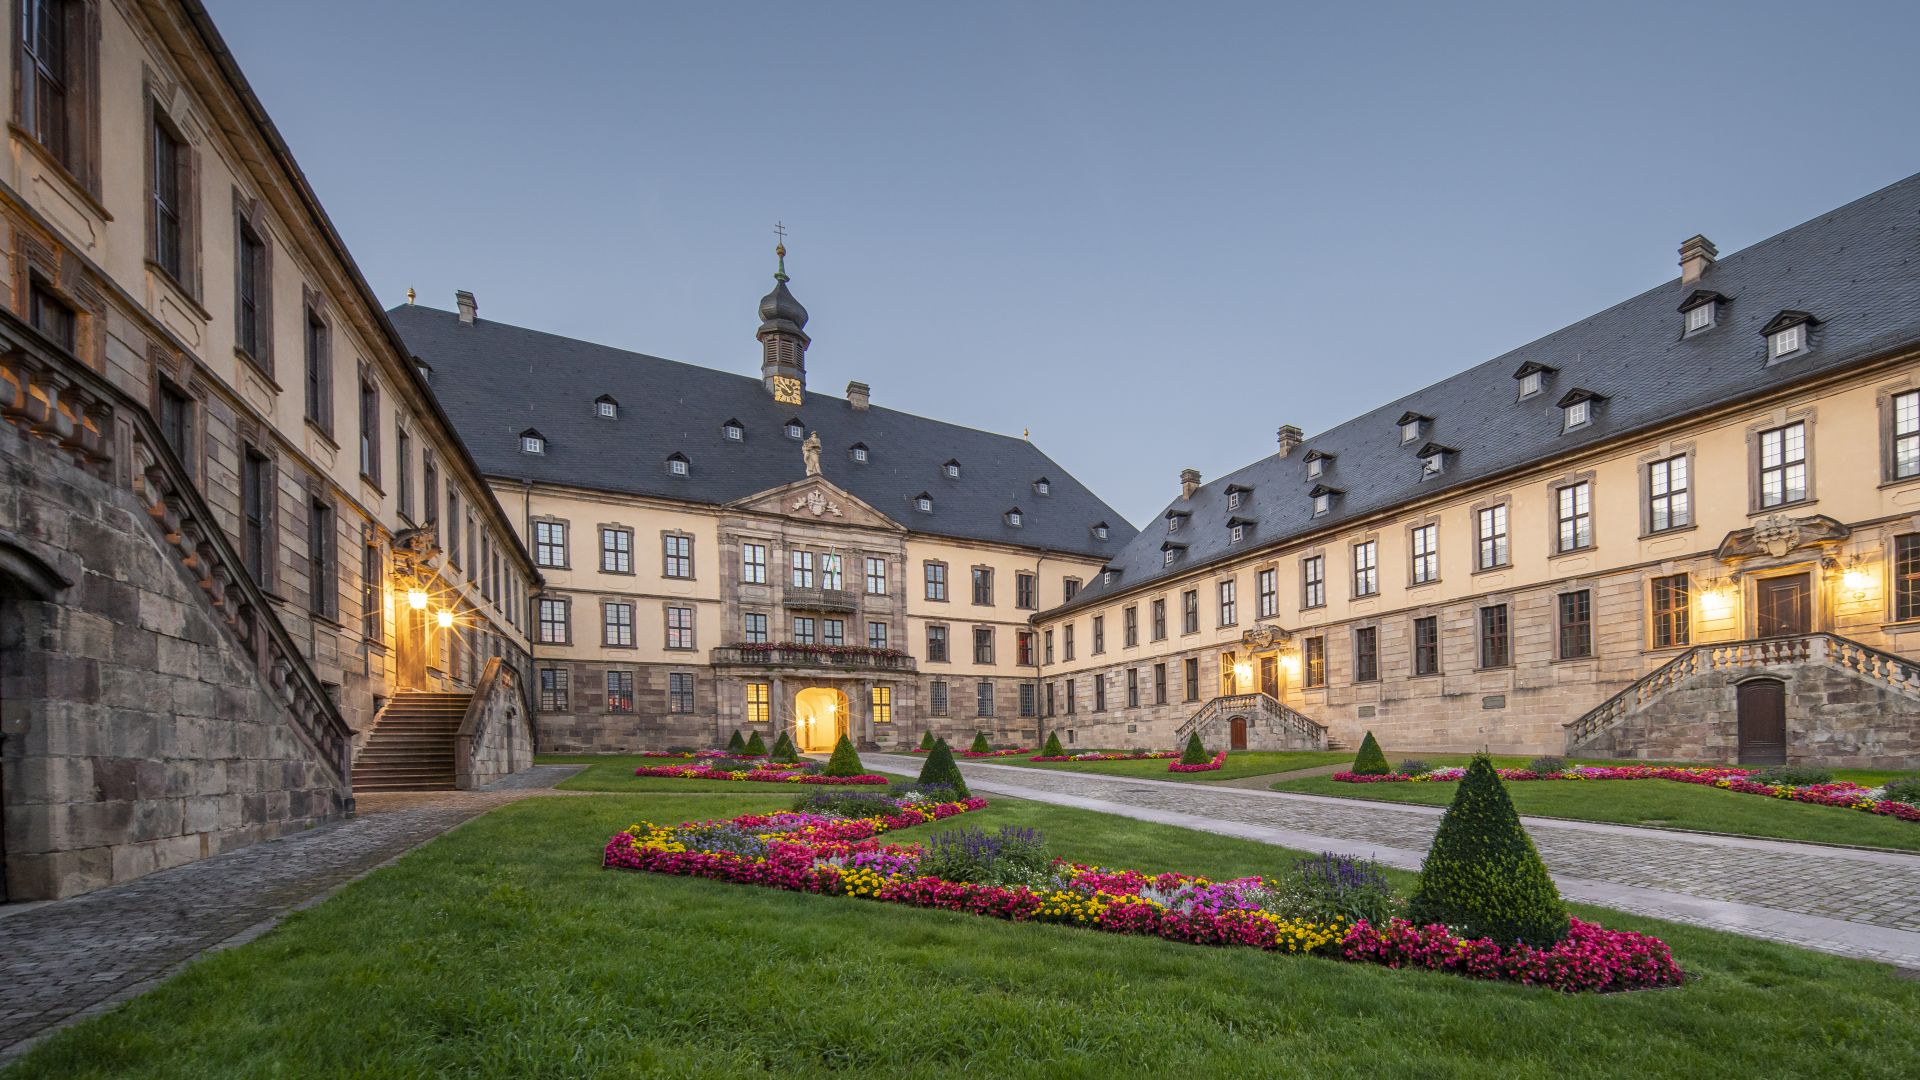 Fulda: Fulda City Palace in the evening